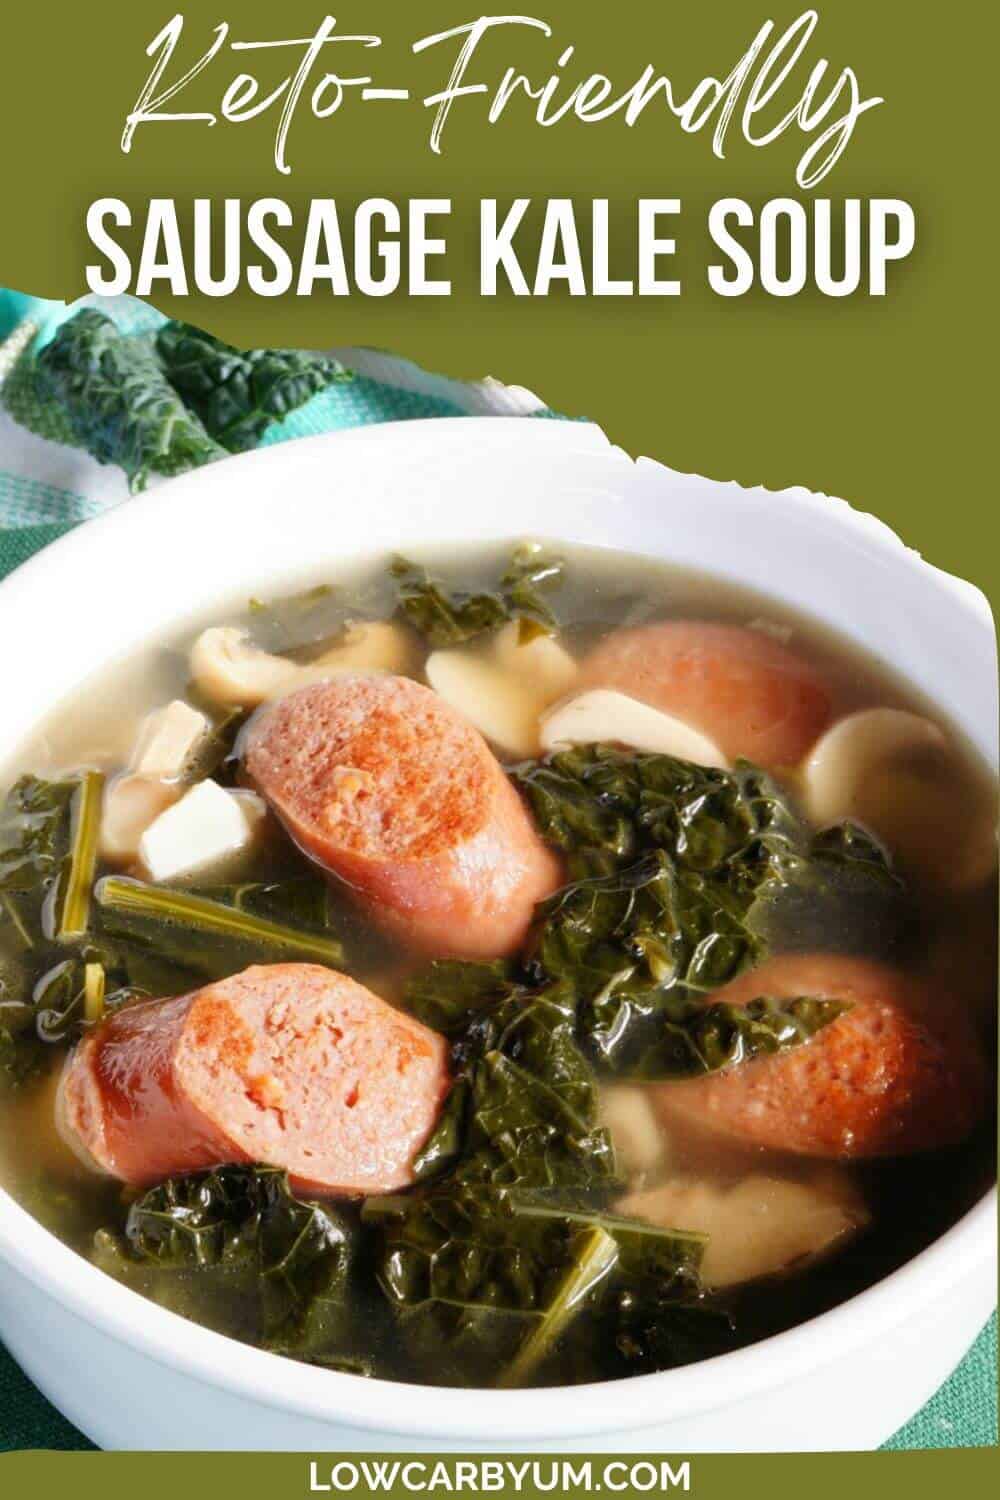 sausage kale soup pinterest image.